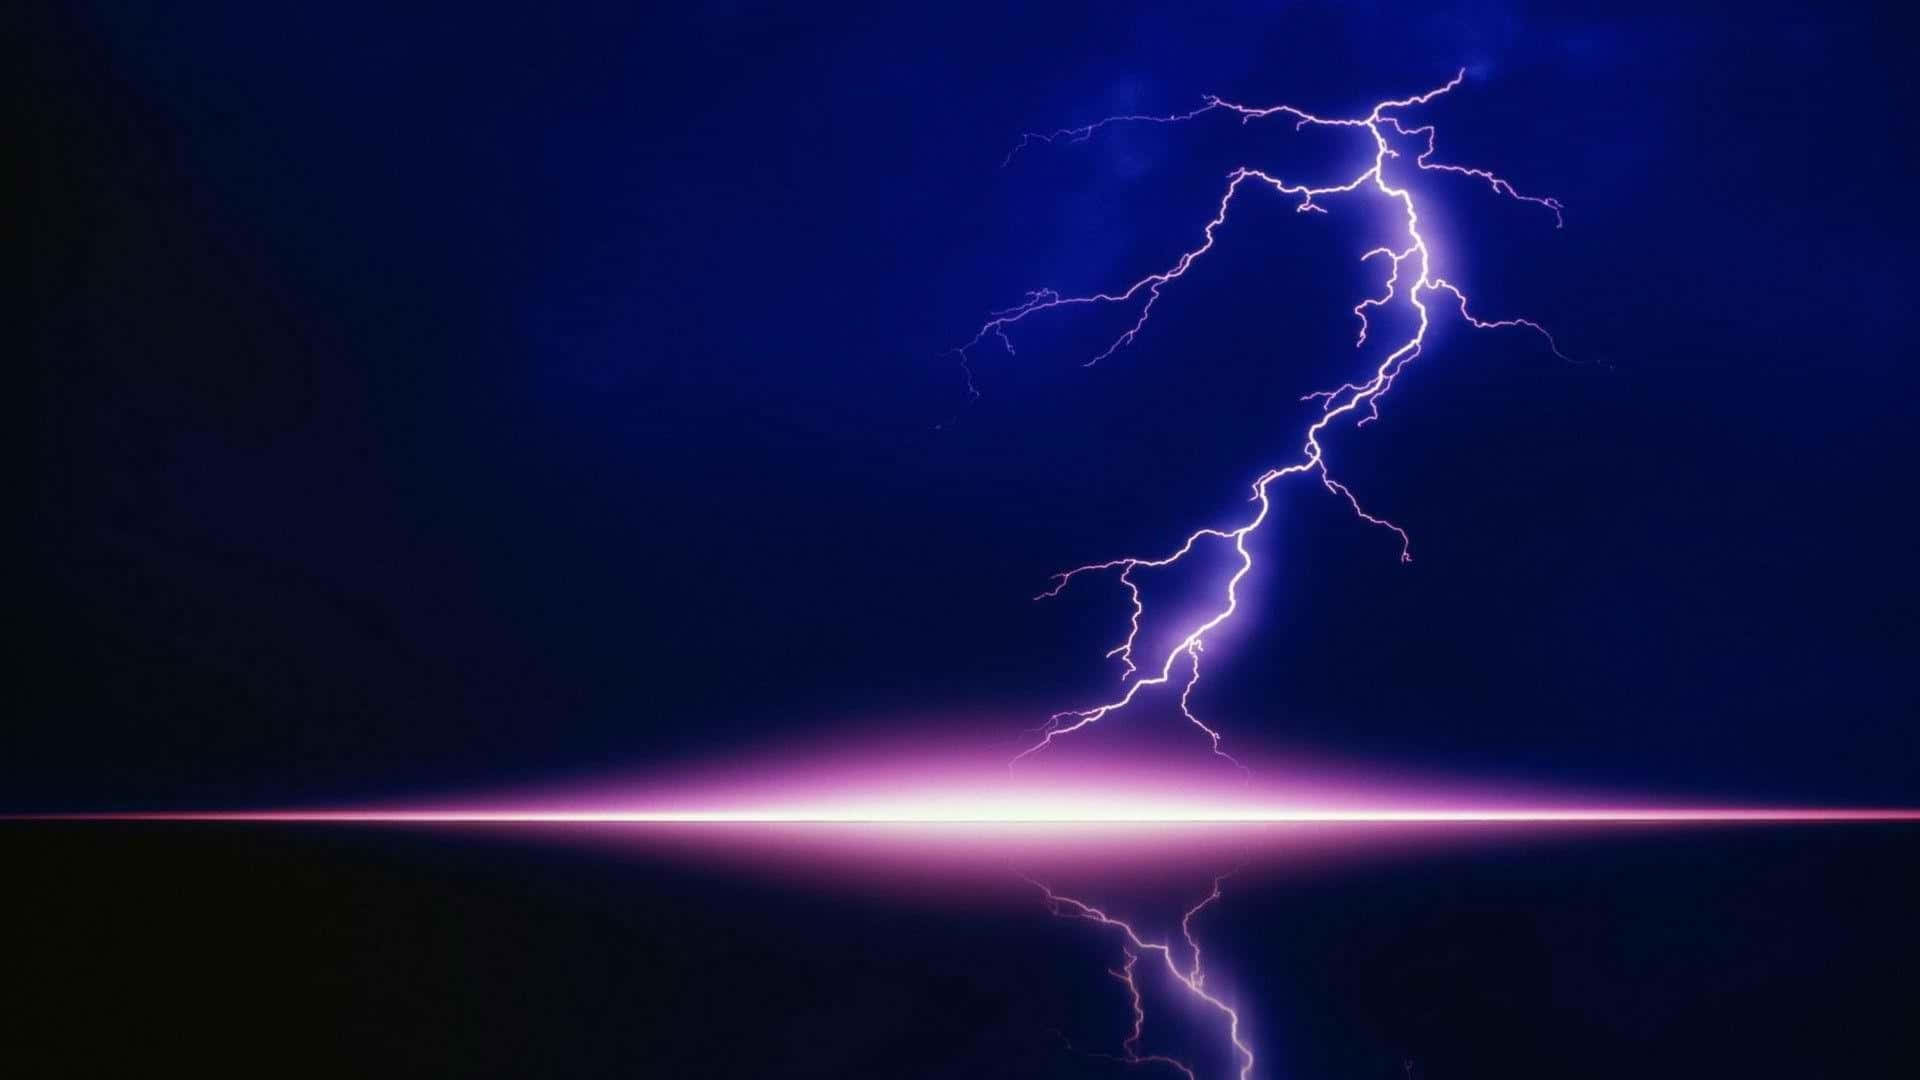 Electrifying Purple Lightning in the Night Sky